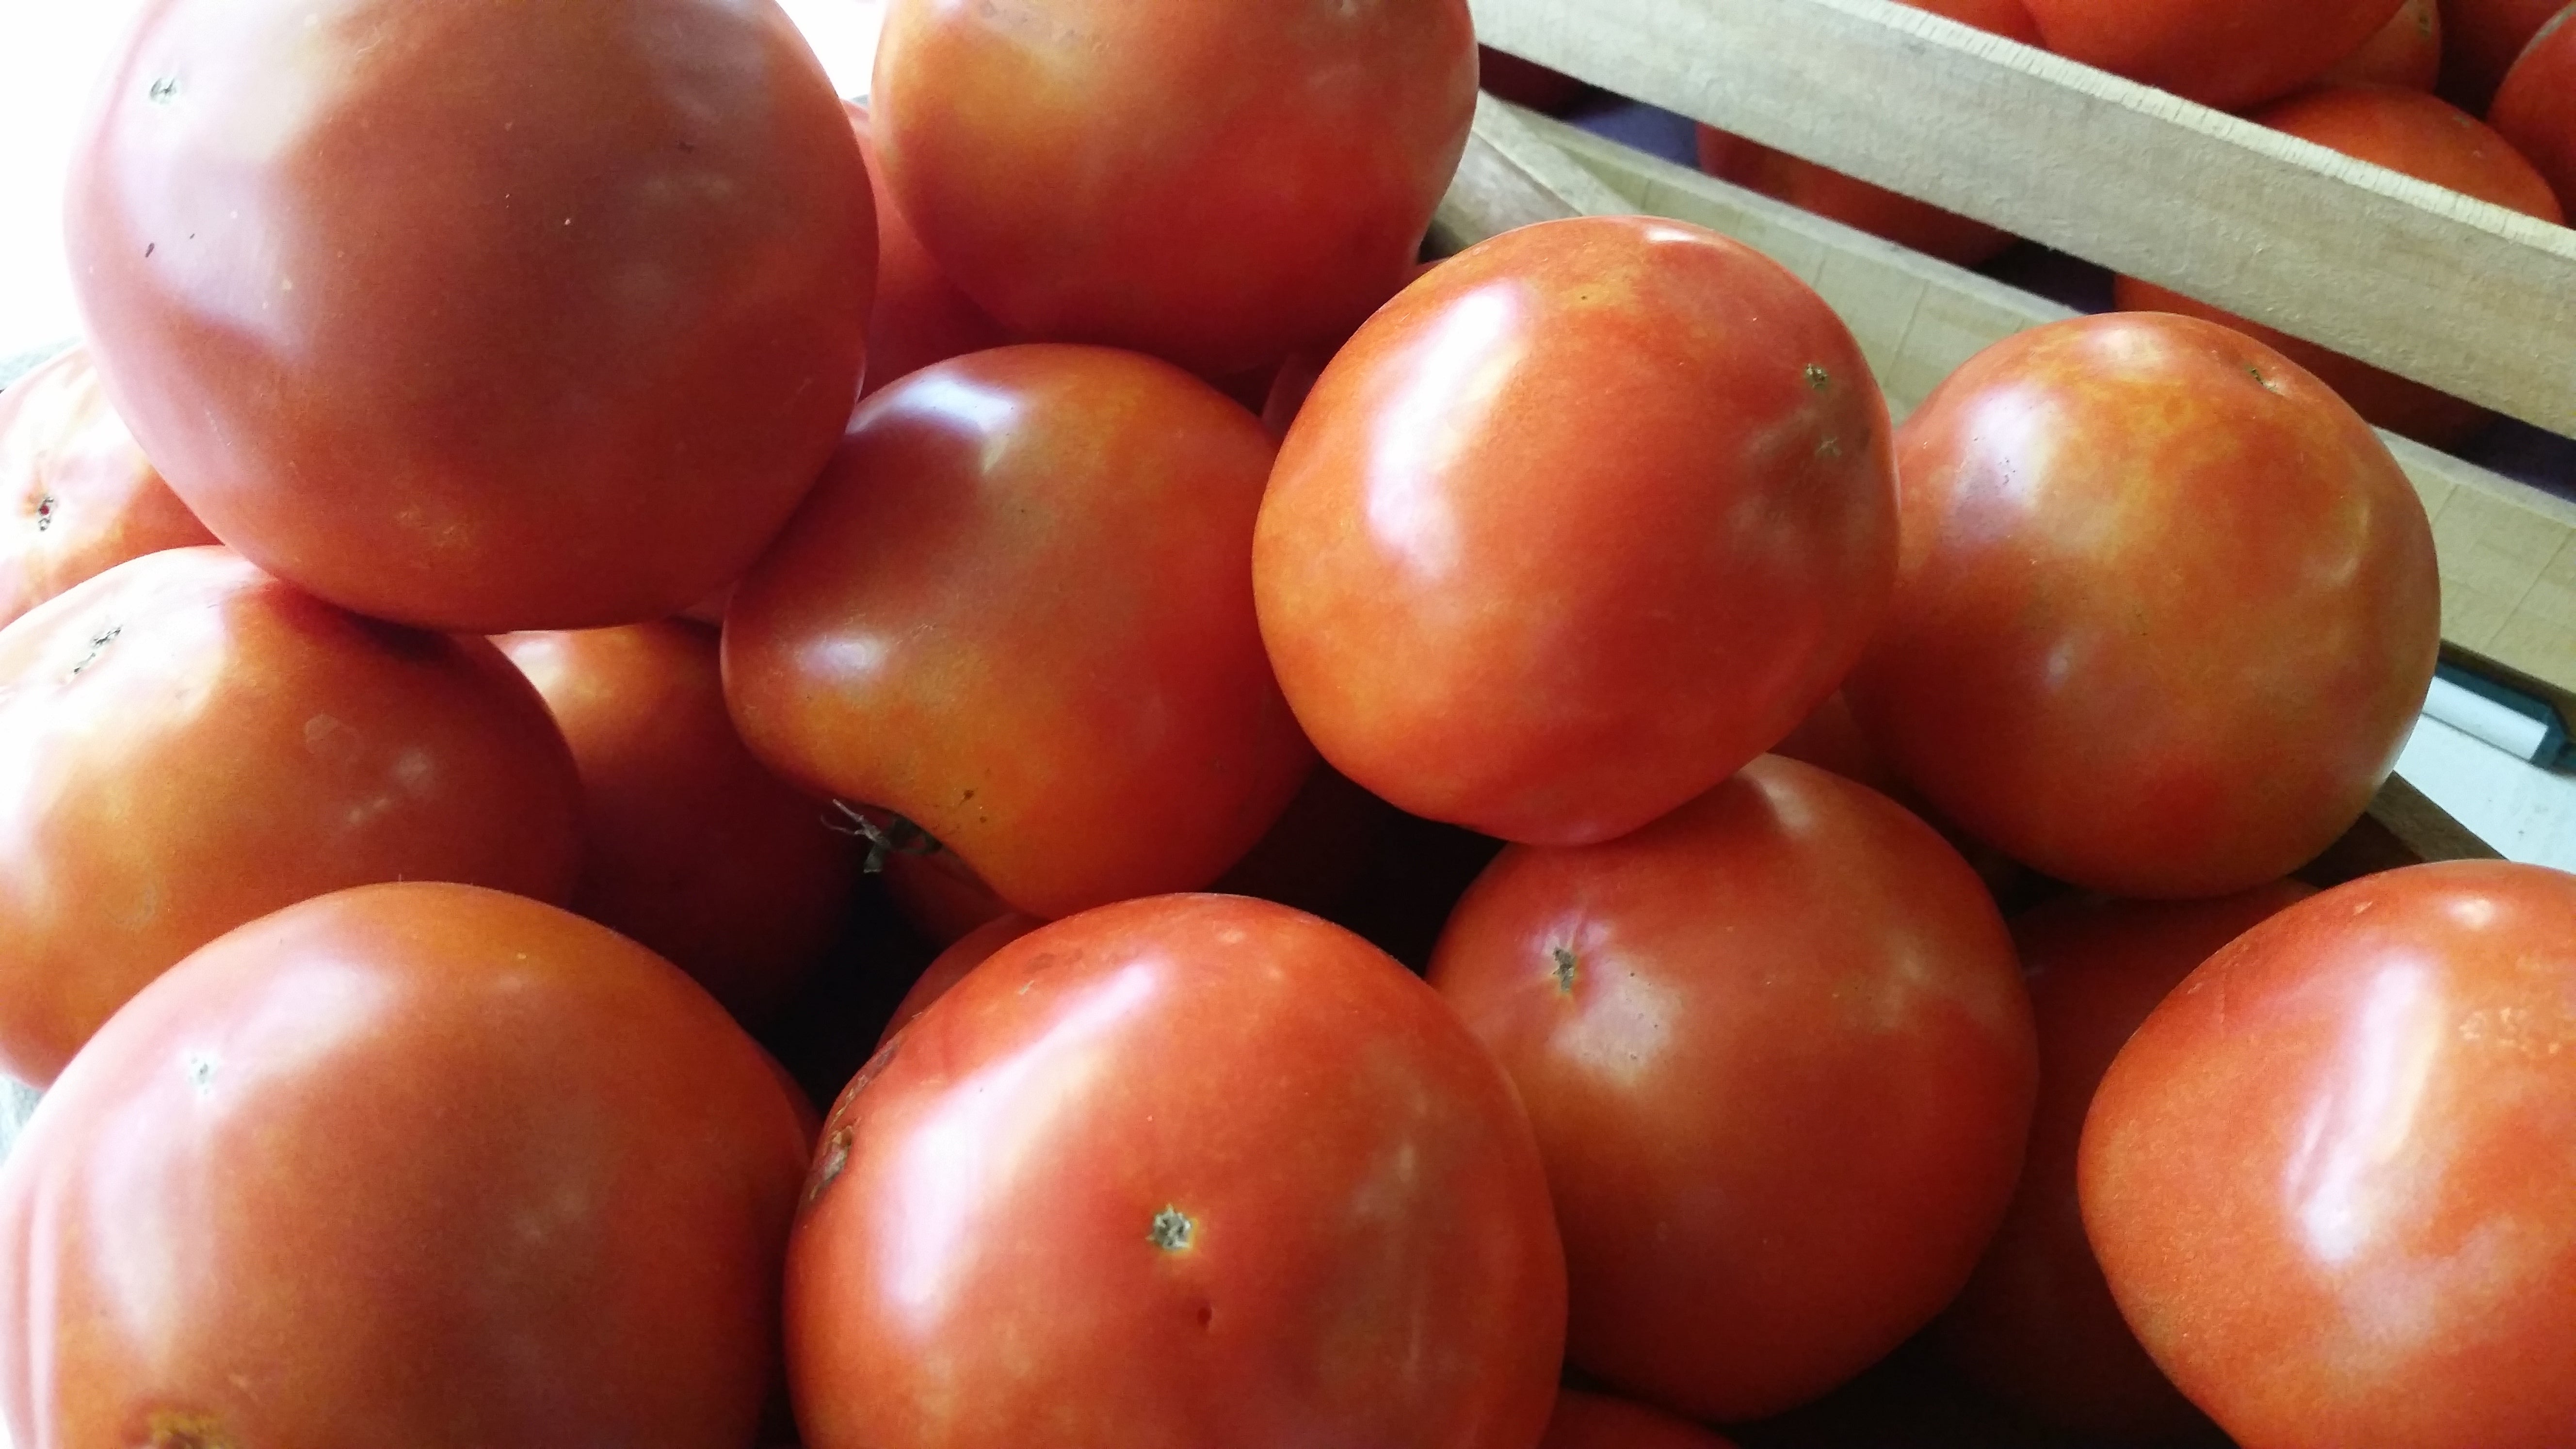 Red, round tomatoes